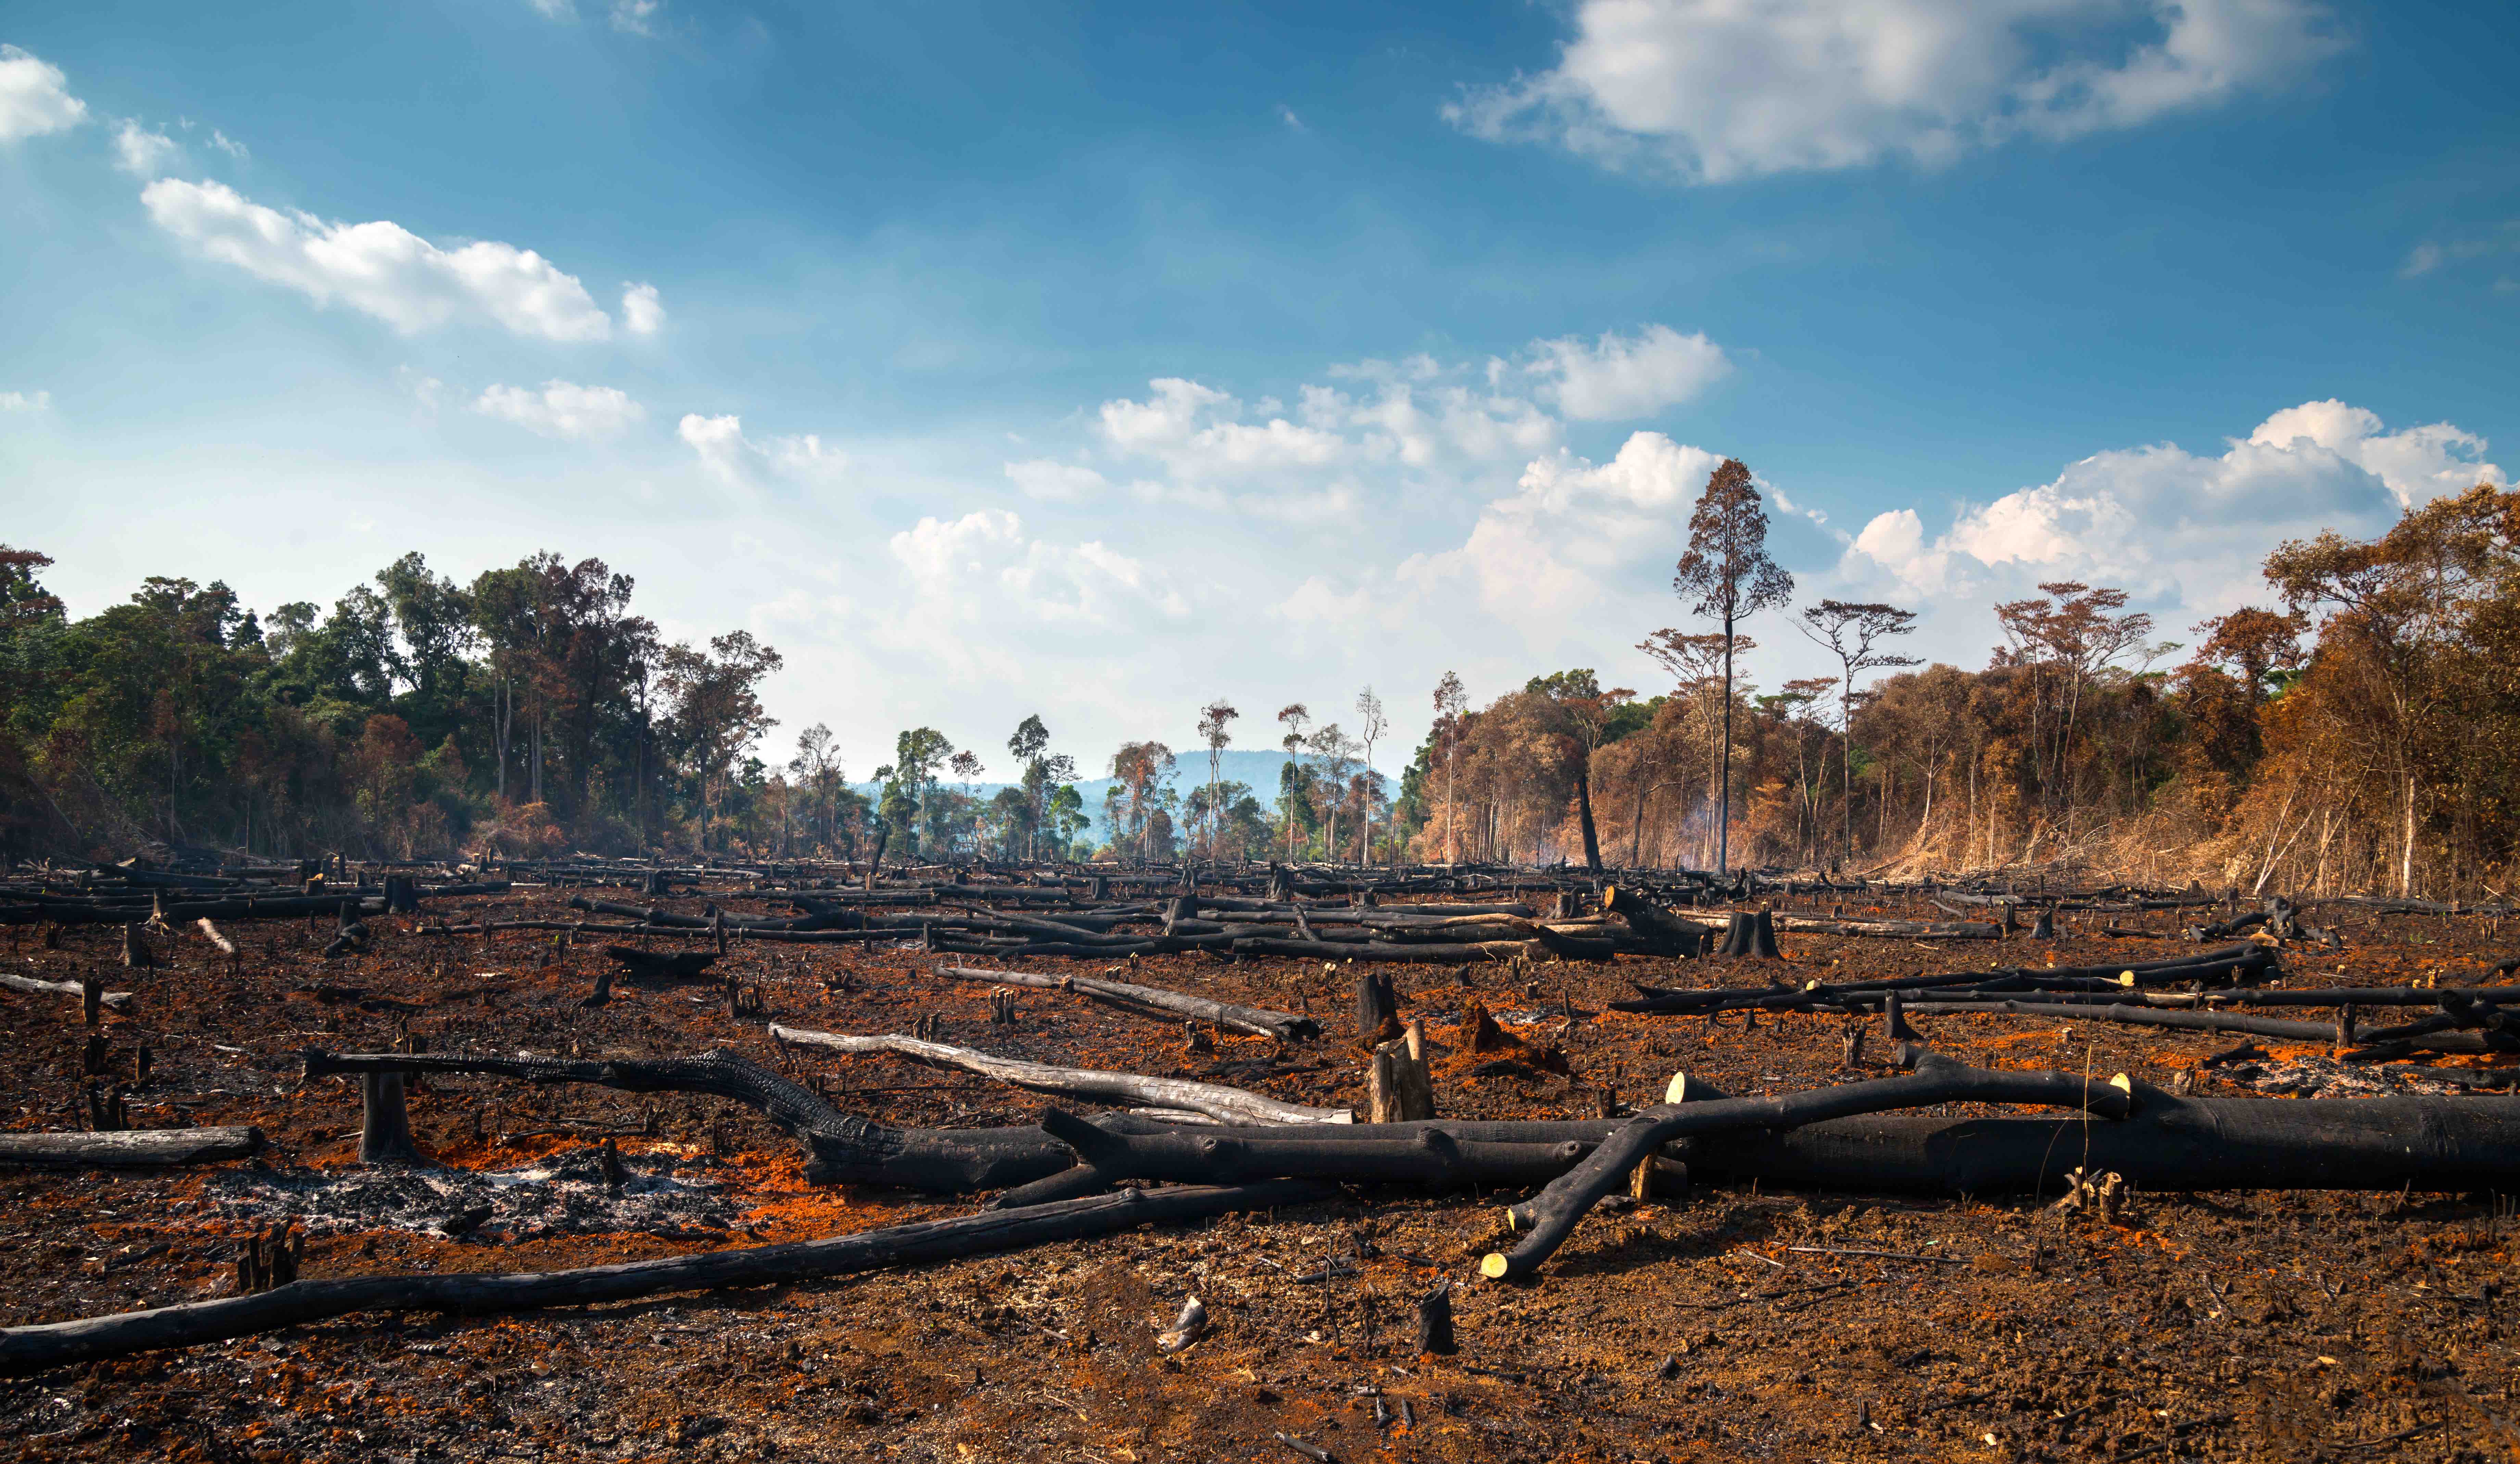 palm oil deforestation facts